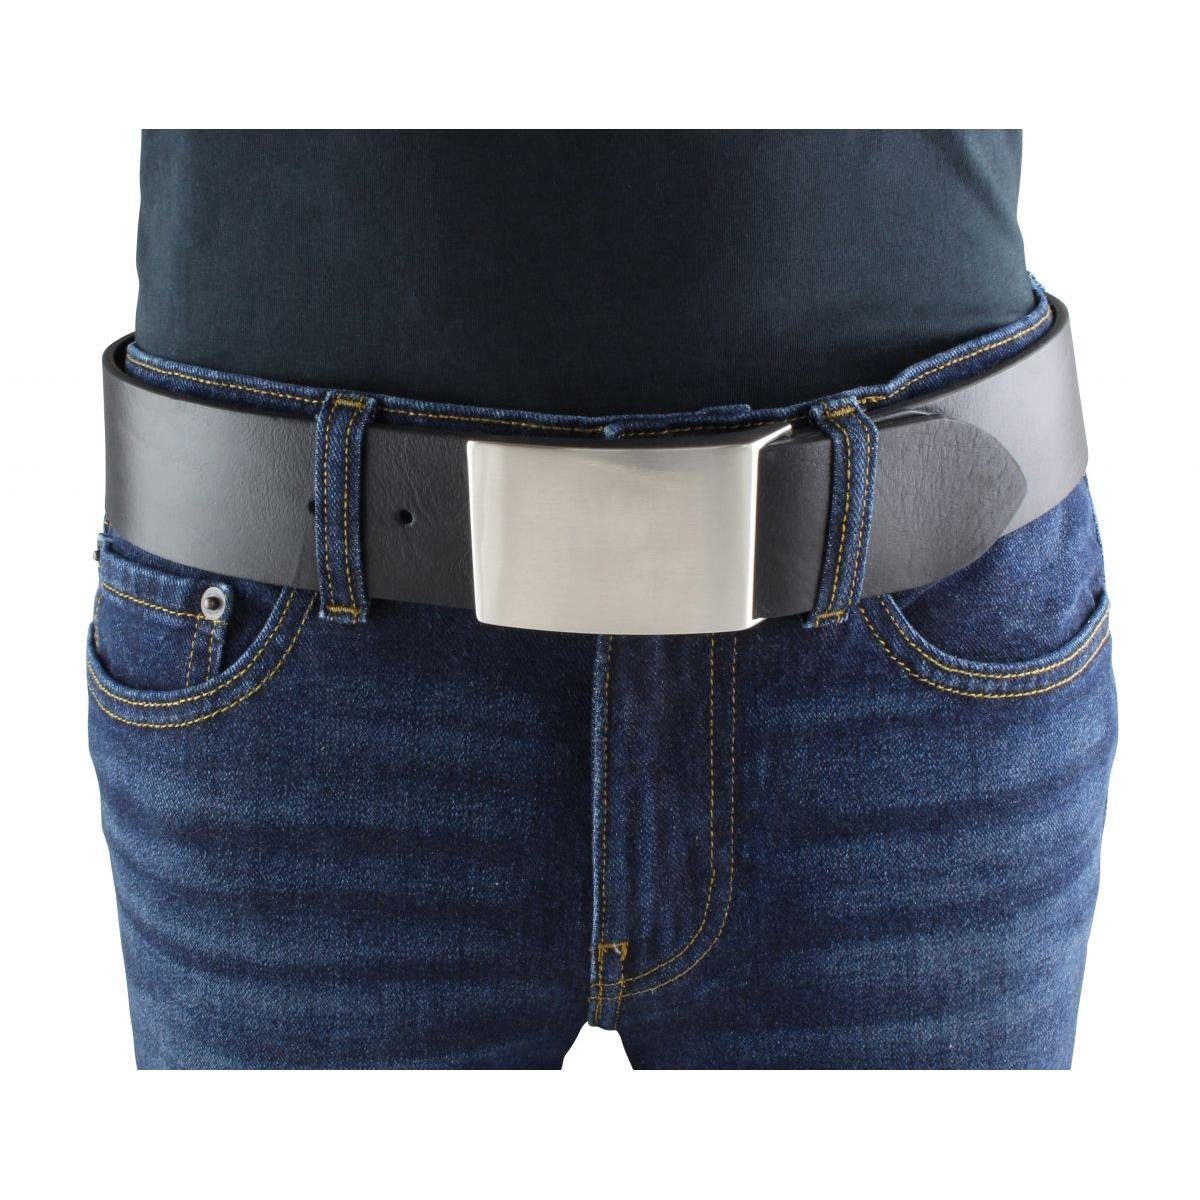 cm Jeans Marine, - - Vollrindleder Herren Silber 50mm Gürtel Jeans-Gürtel für aus 5,0 Ledergürtel BELTINGER